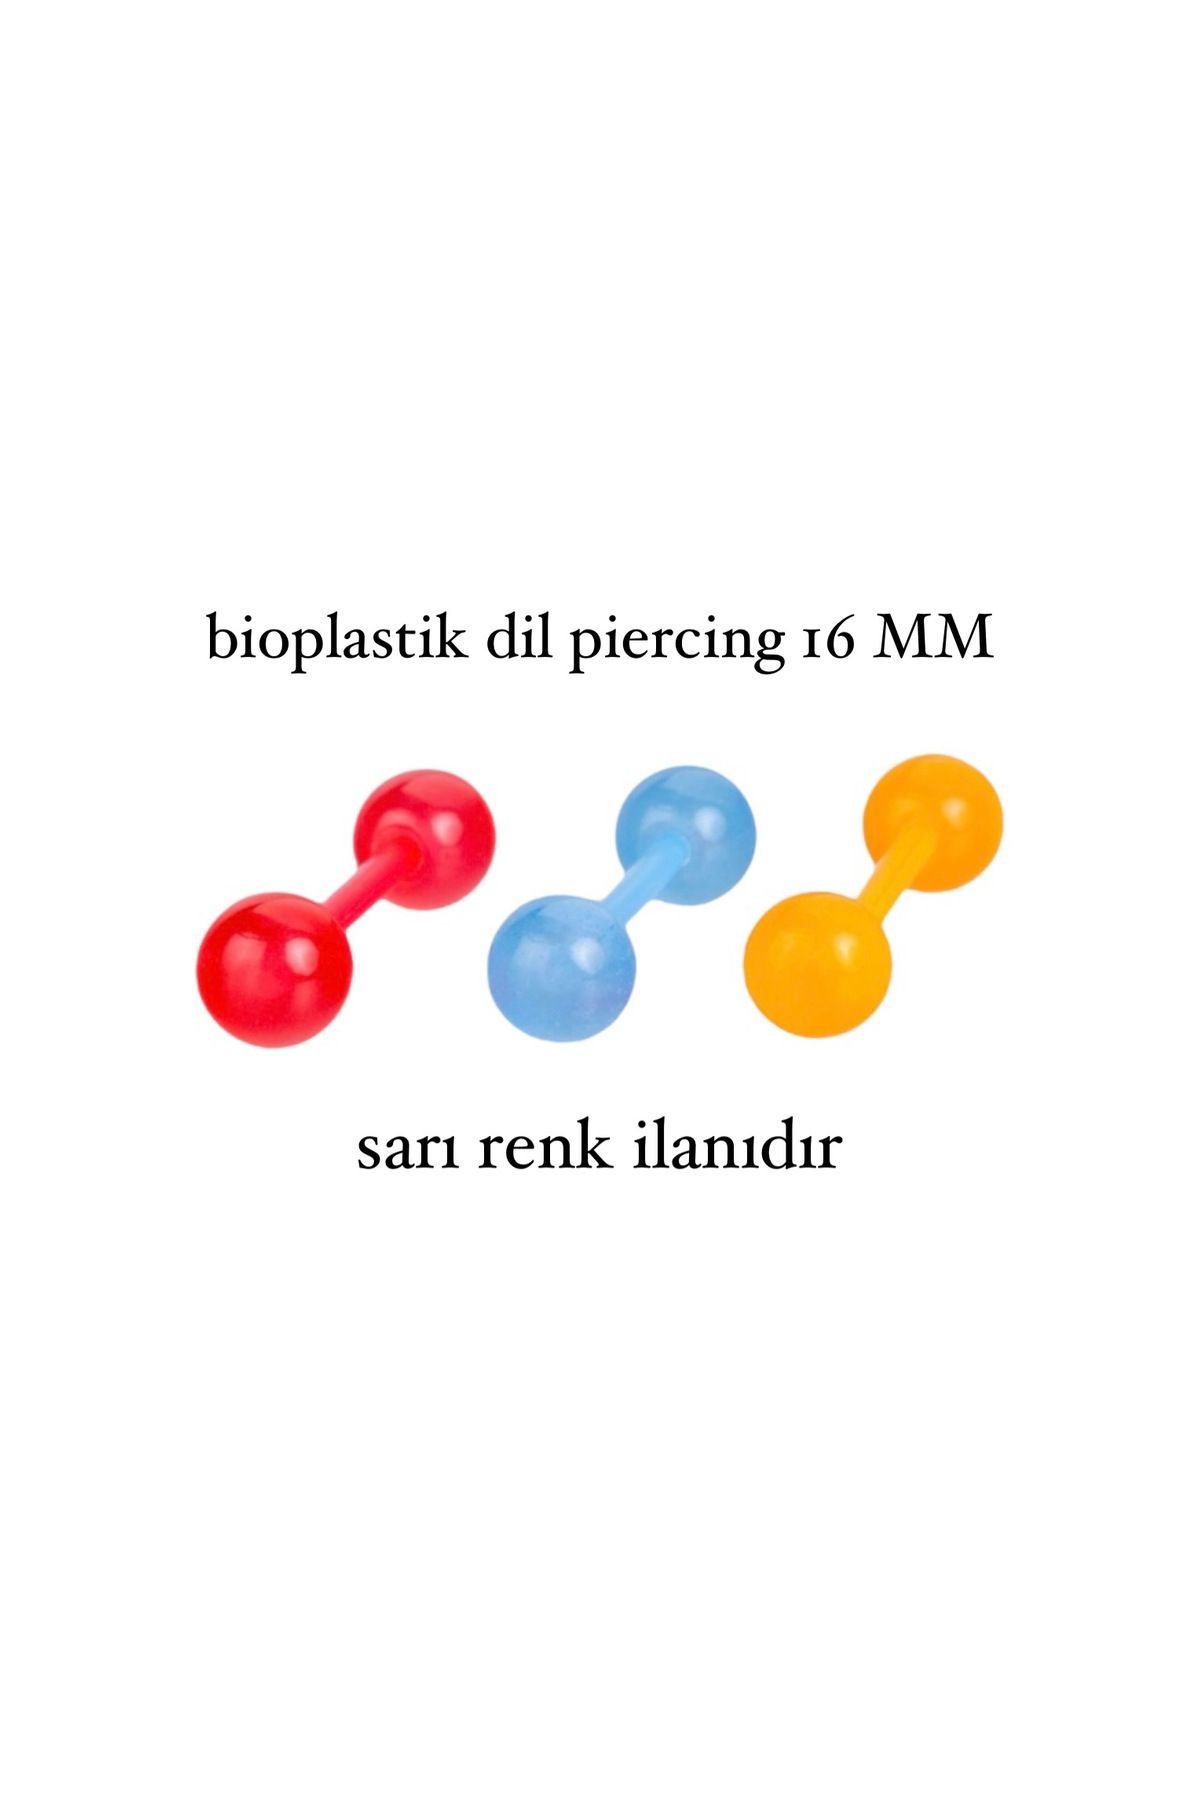 Doa Bioplast Dil Piercing 16 MM